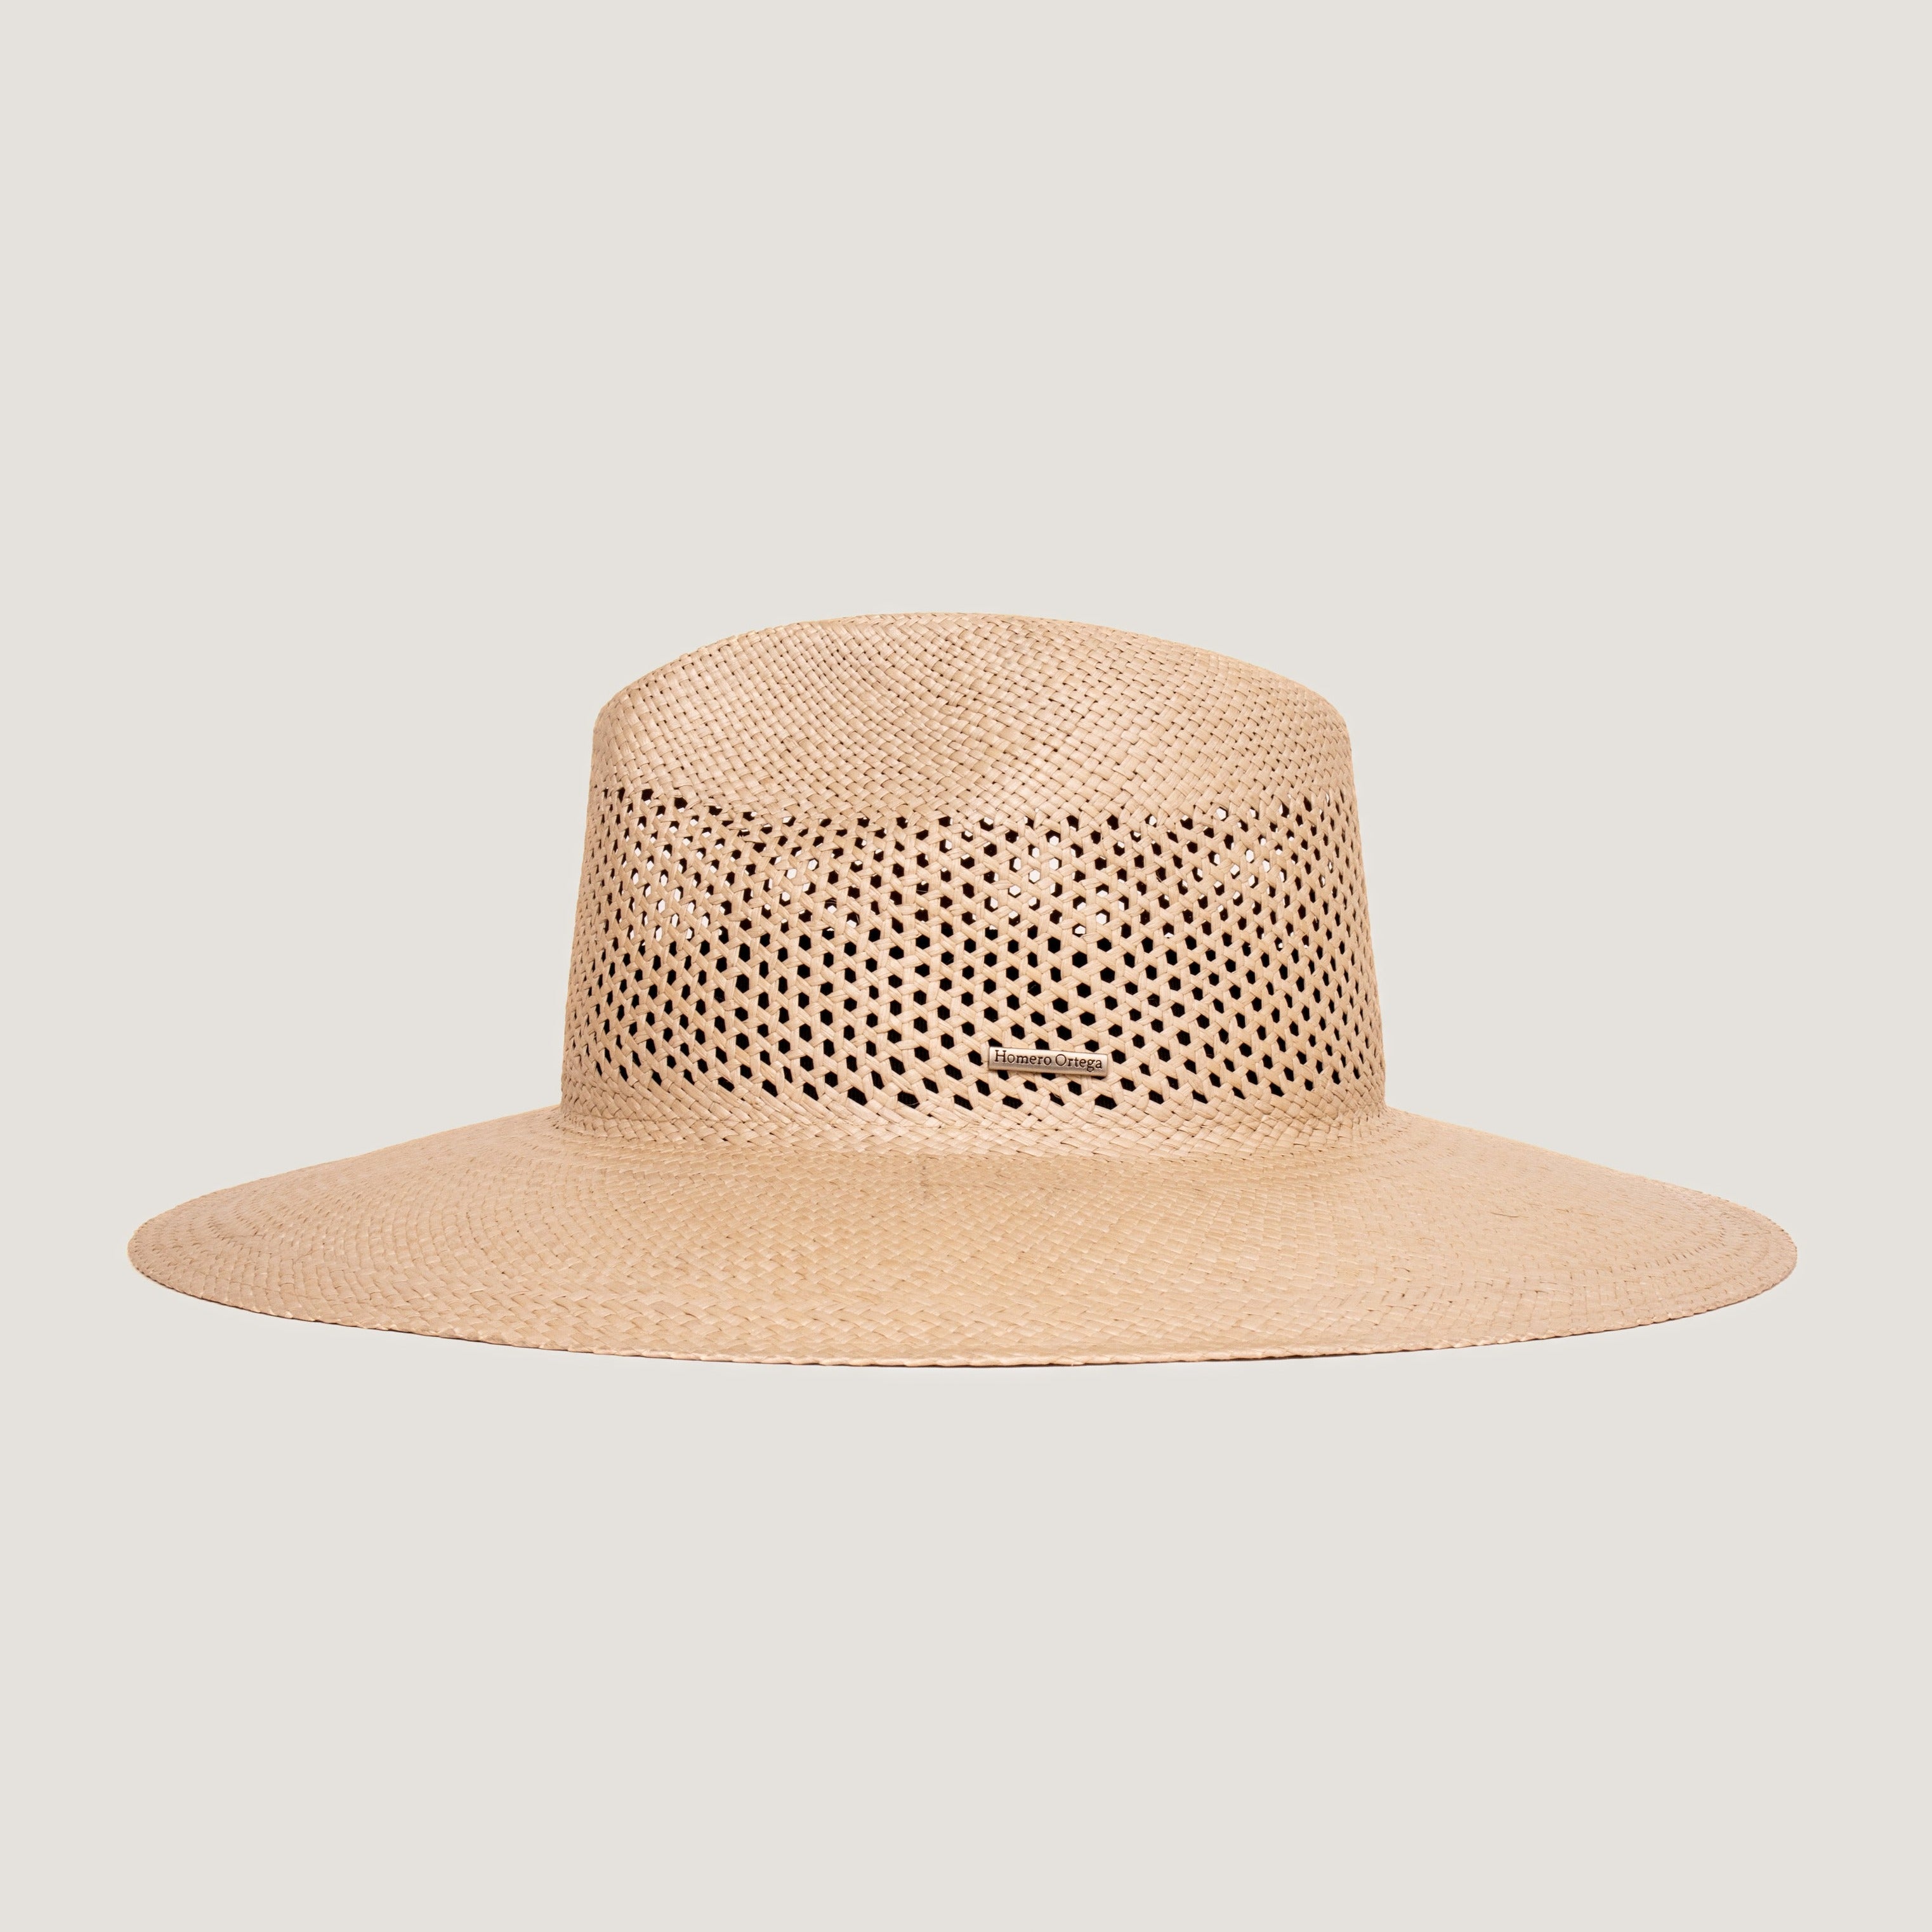 straw summer hat for sale in australia